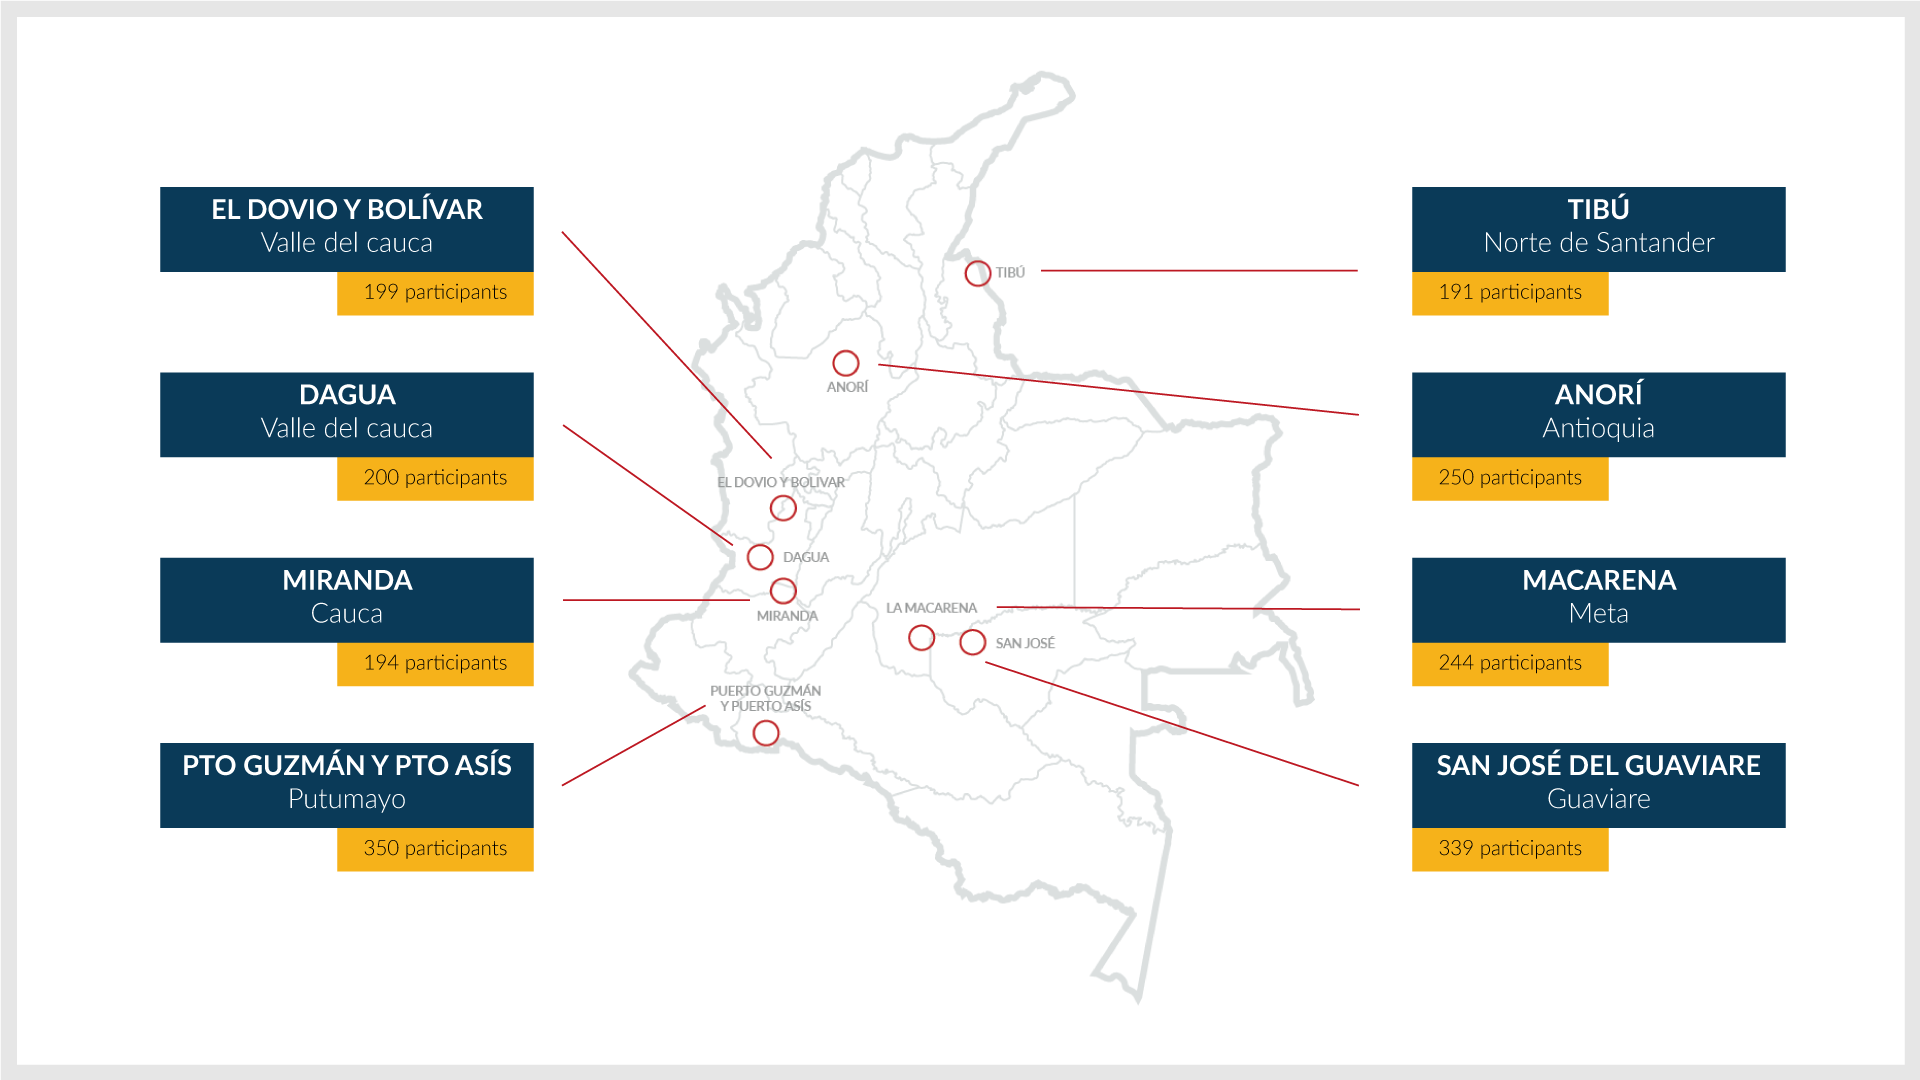 Illicit crop Colombia alternative map